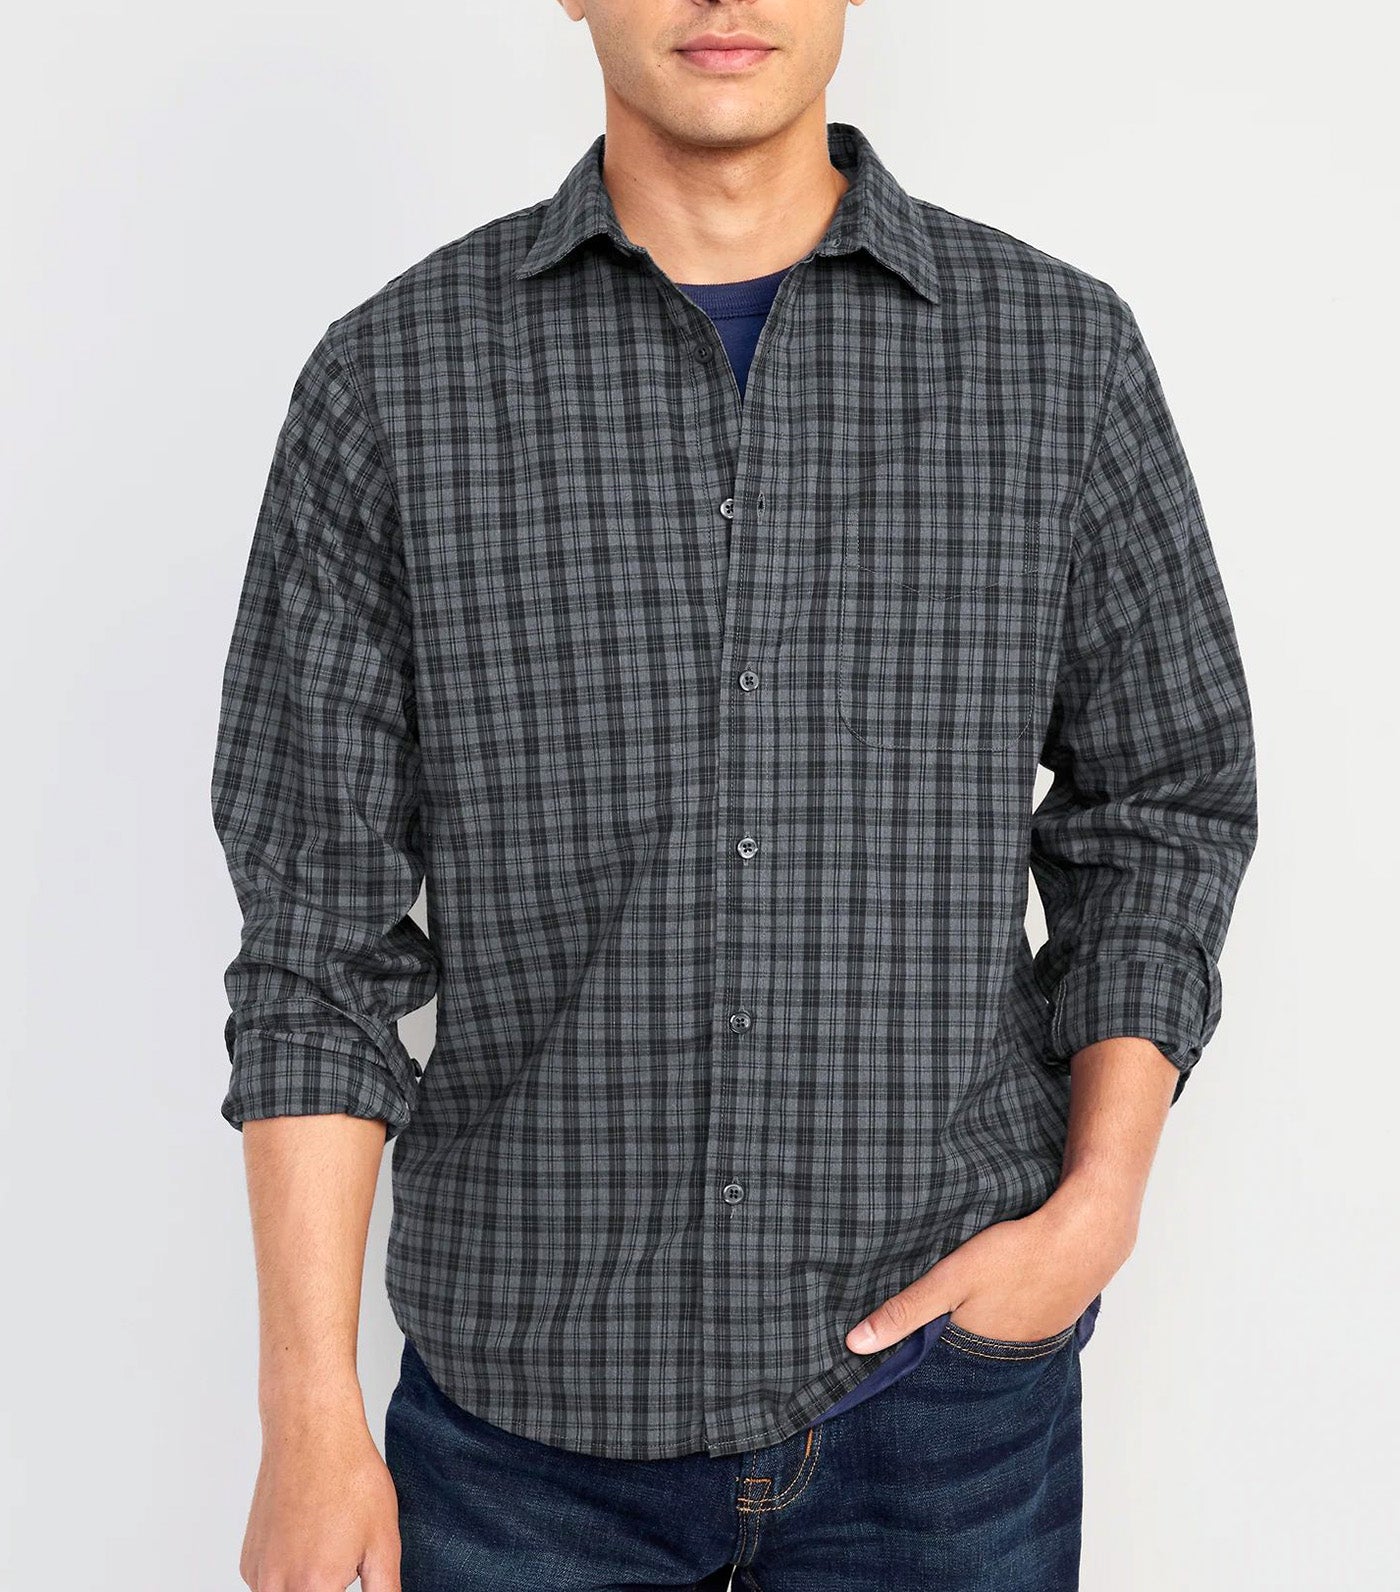 Regular-Fit Built-In Flex Patterned Everyday Shirt for Men Gray/Blue Plaid